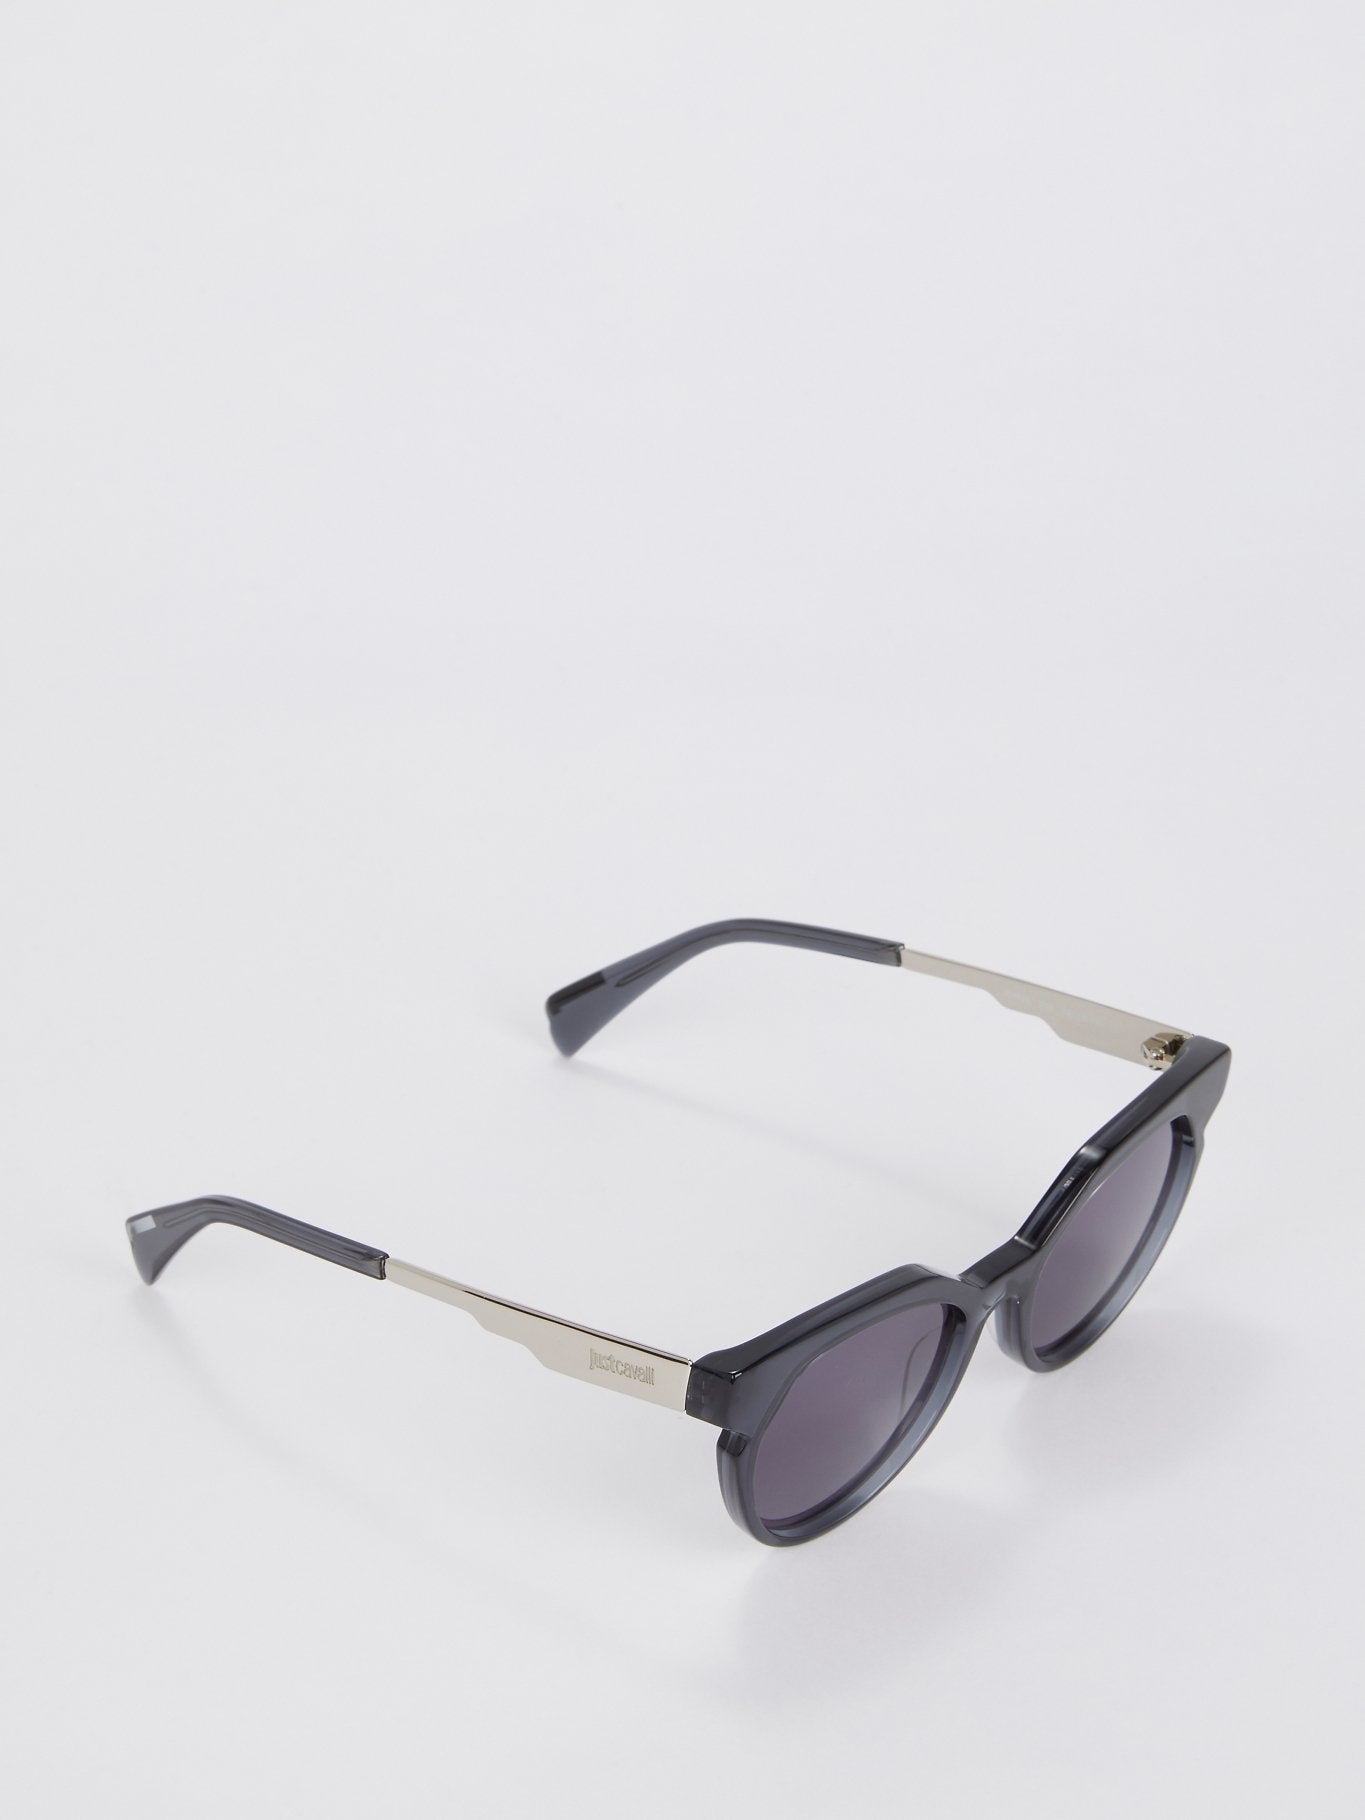 Smoke Lens Cat Eye Sunglasses